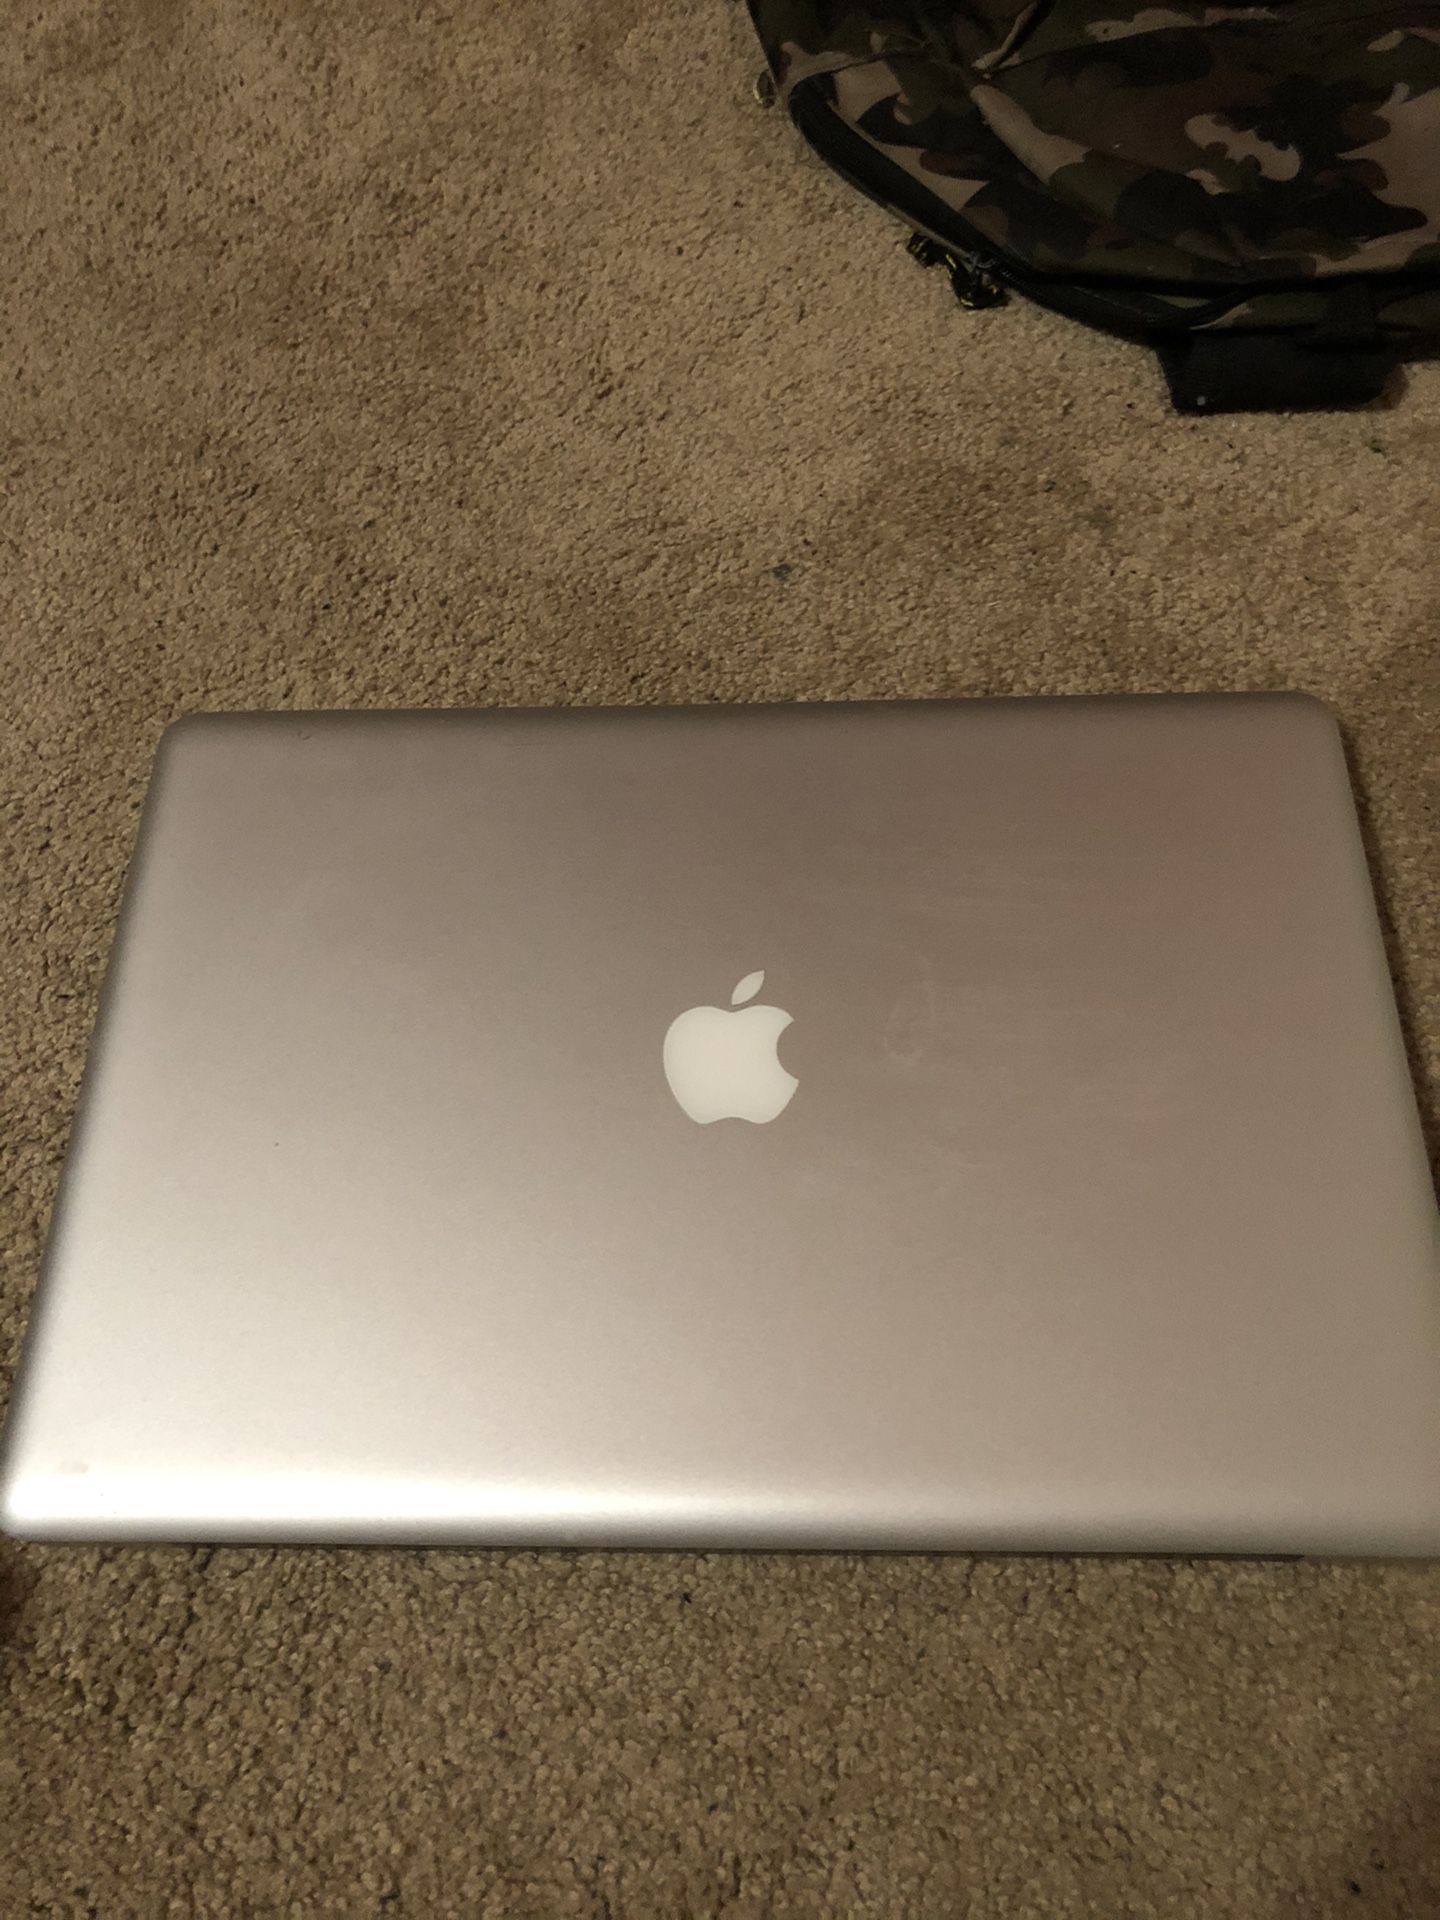 MacBook Pro 15” late 2011